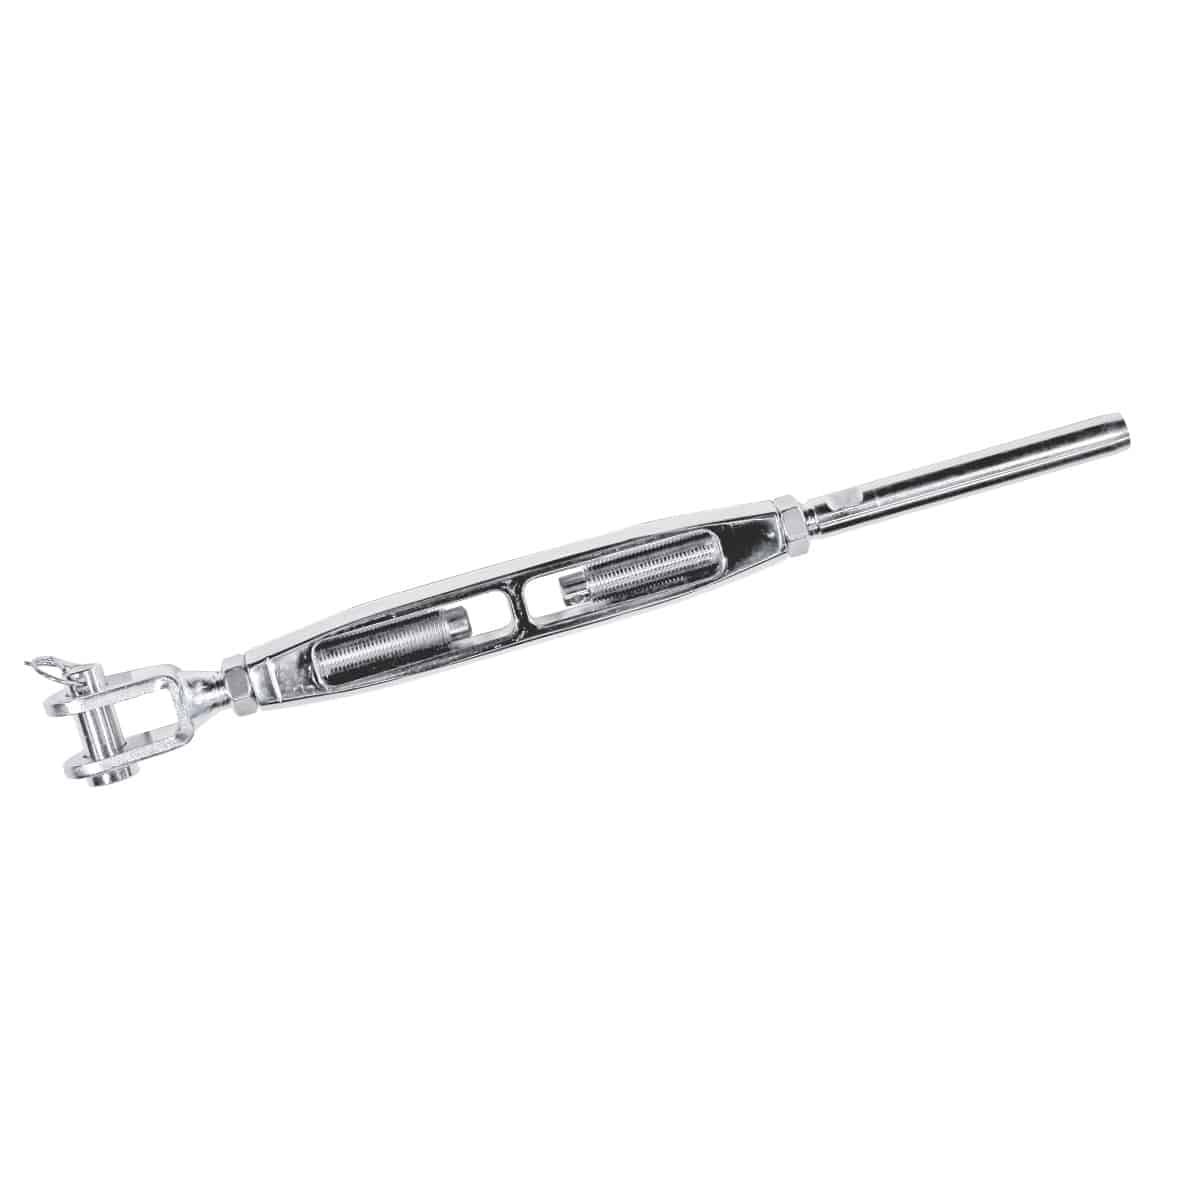 1308xxxx Rigging screw fork/terminal